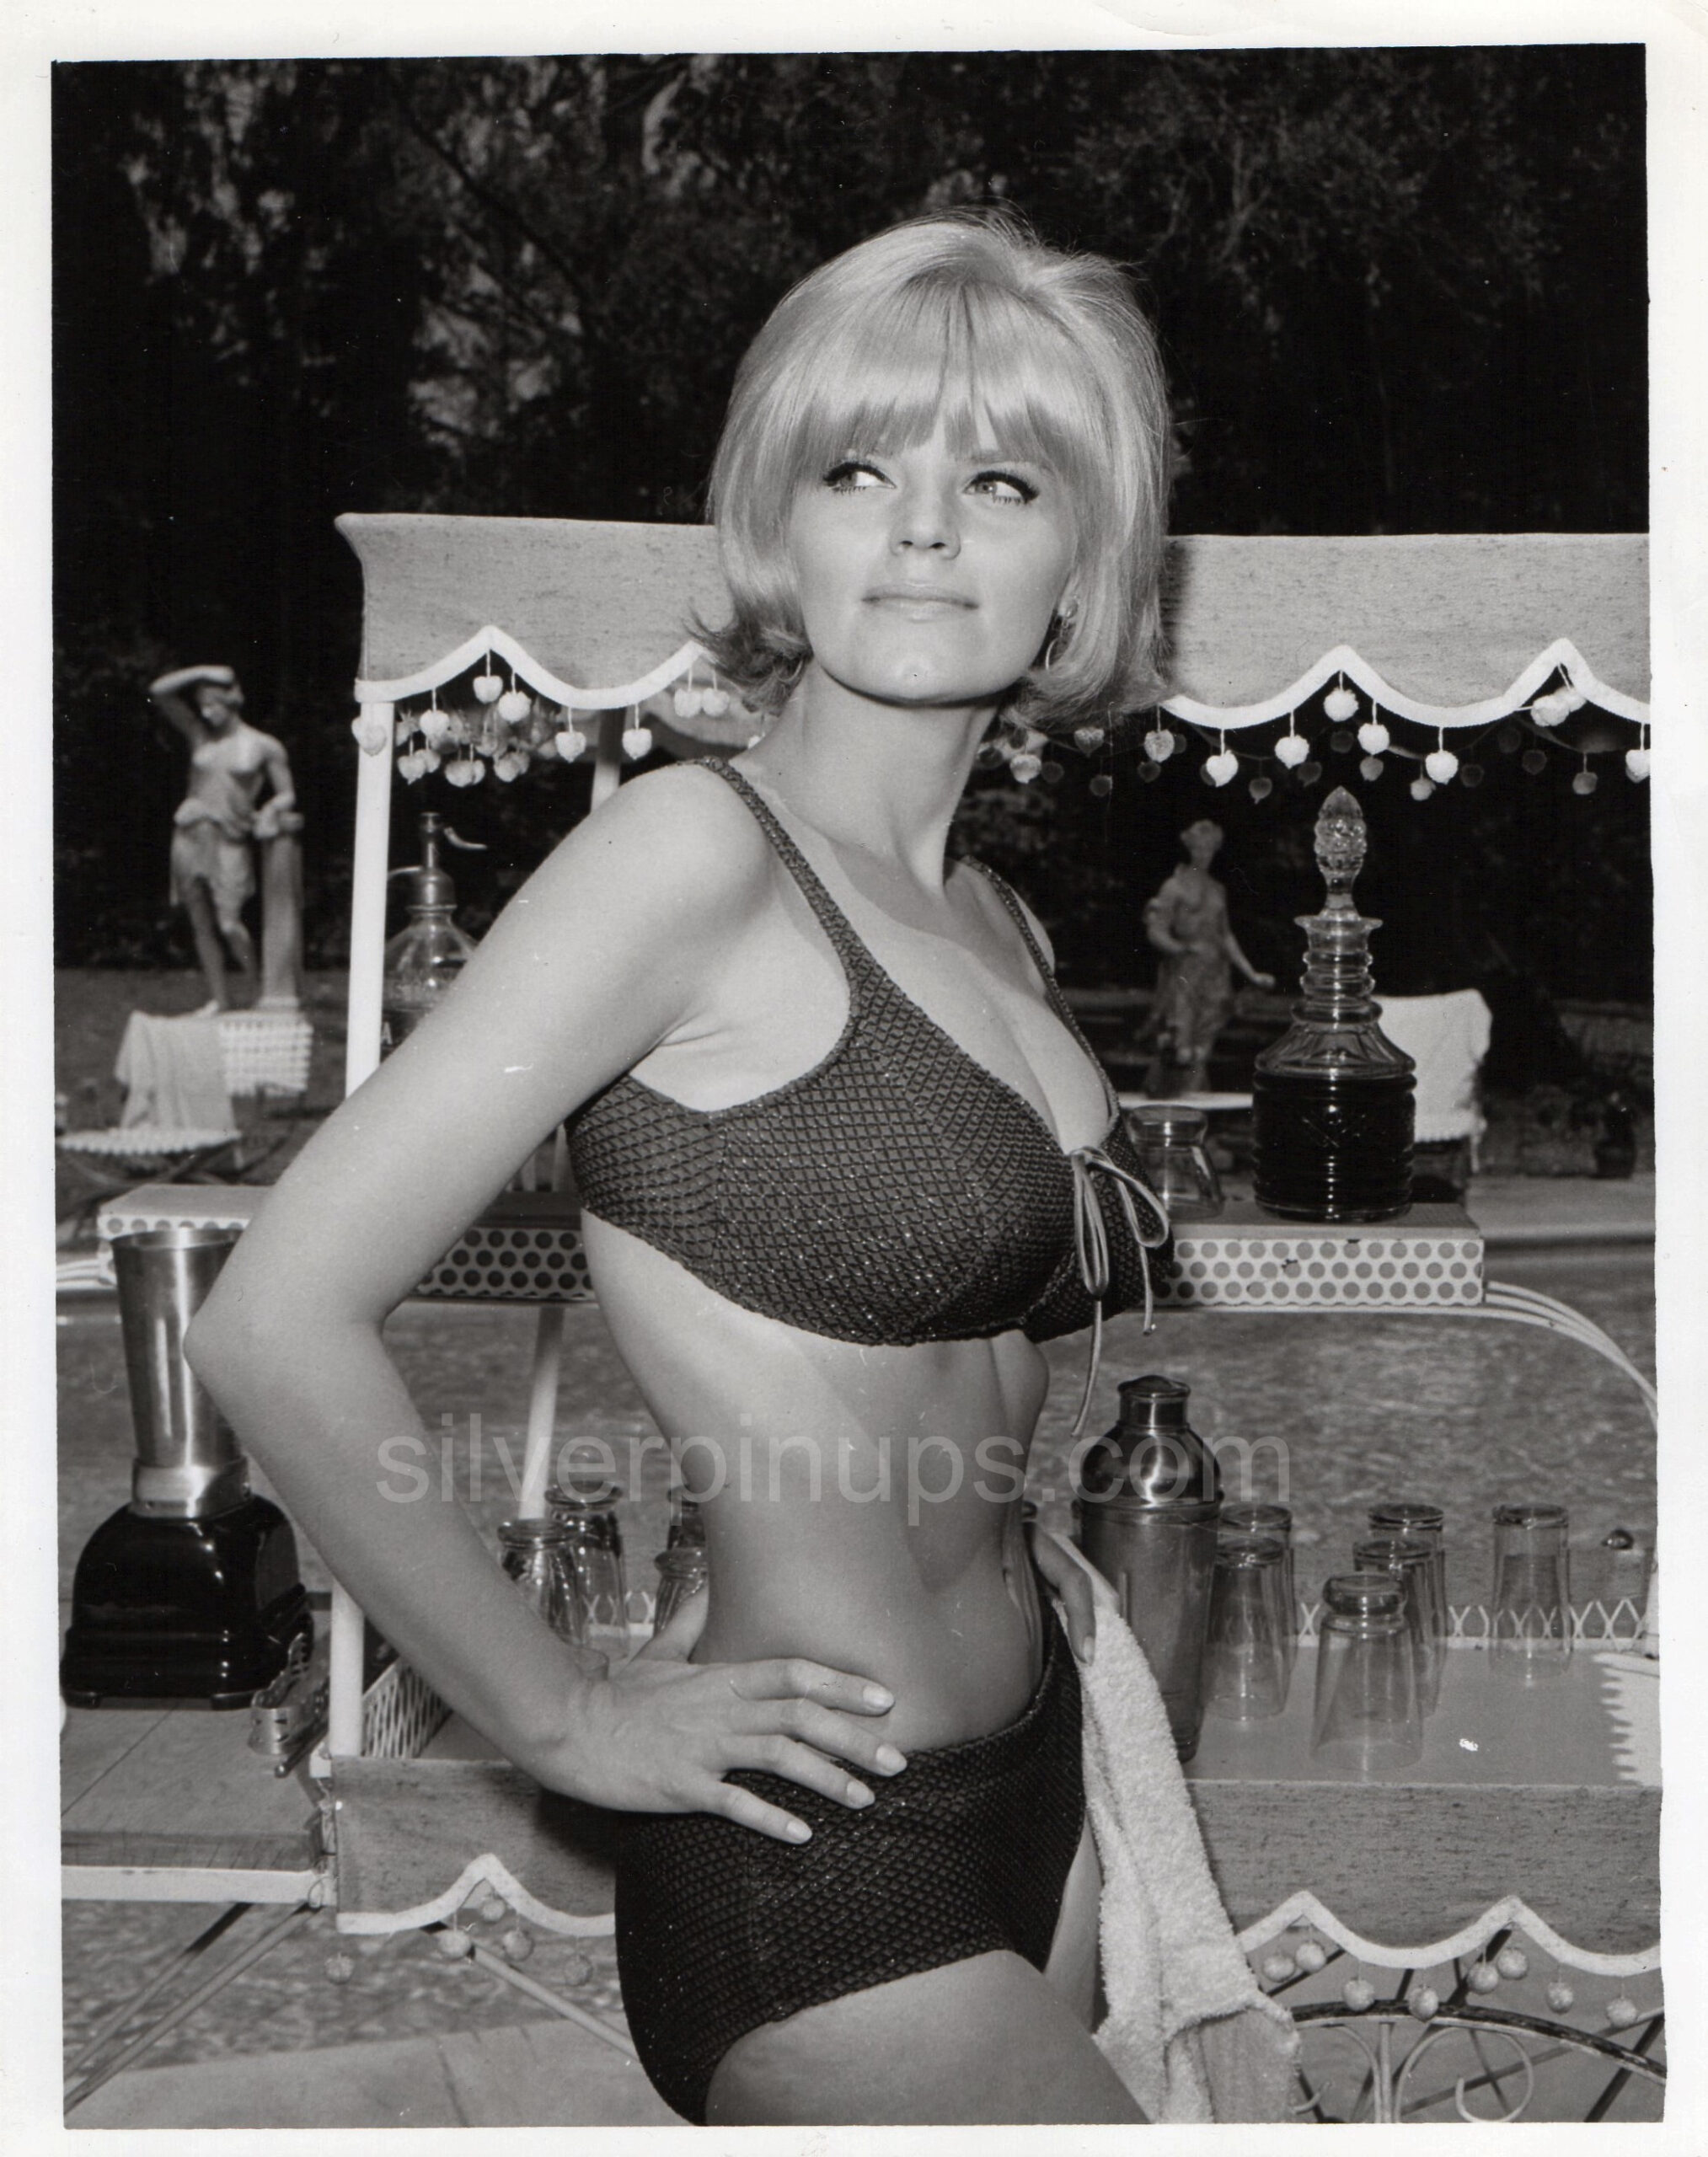 Orig 1966 Carol Wayne Busty Bikini Debut Pin Up Portrait “the Man From U N C L E” Silverpinups